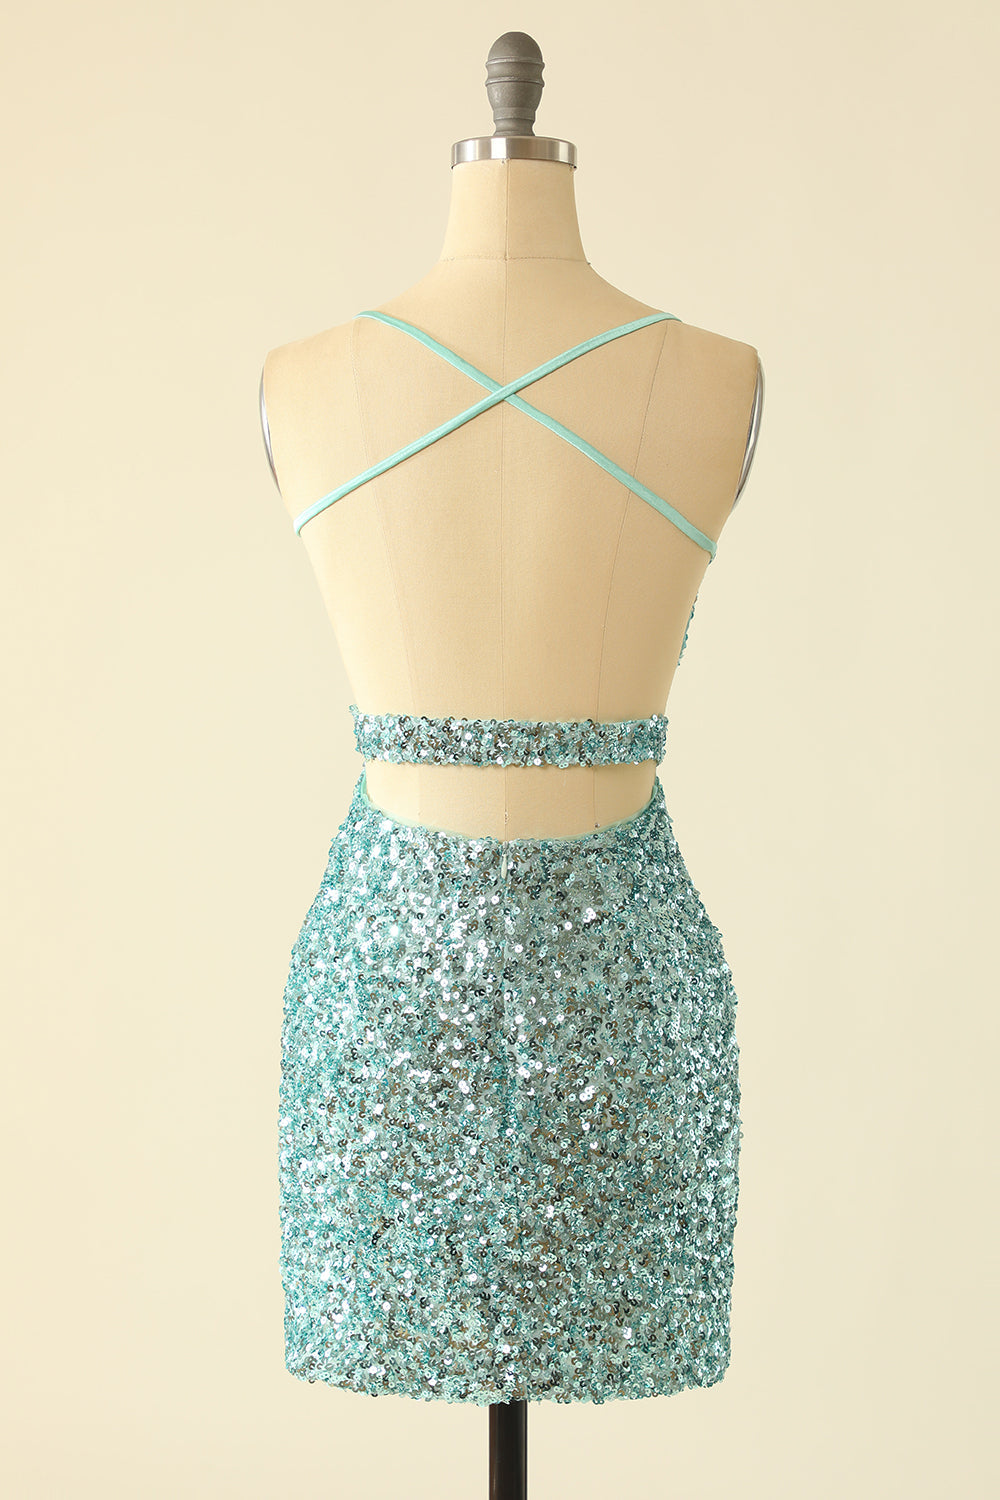 Blue Open Back Sequin Glitter Party Dress